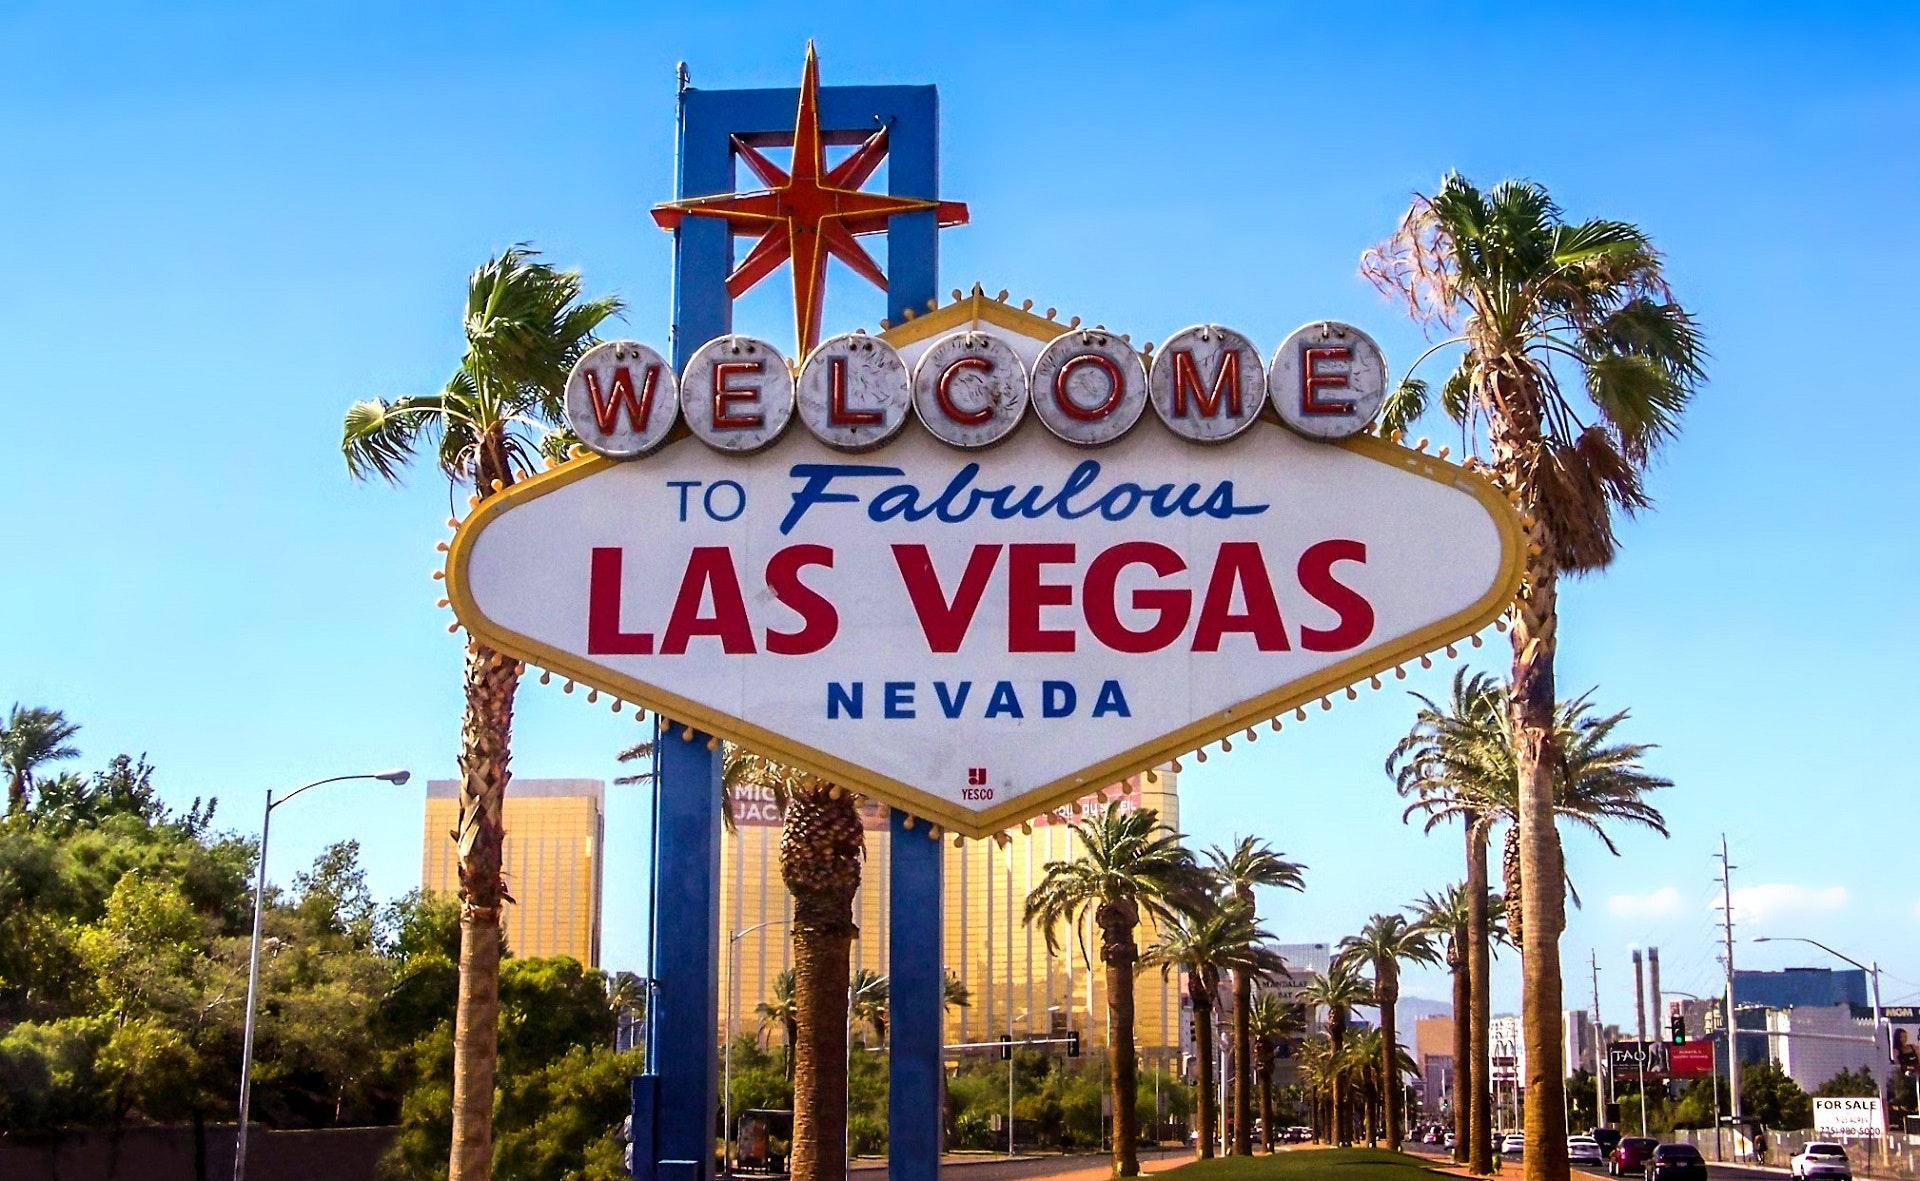 Las Vegas hotels under investigation for legionnaires' disease cases